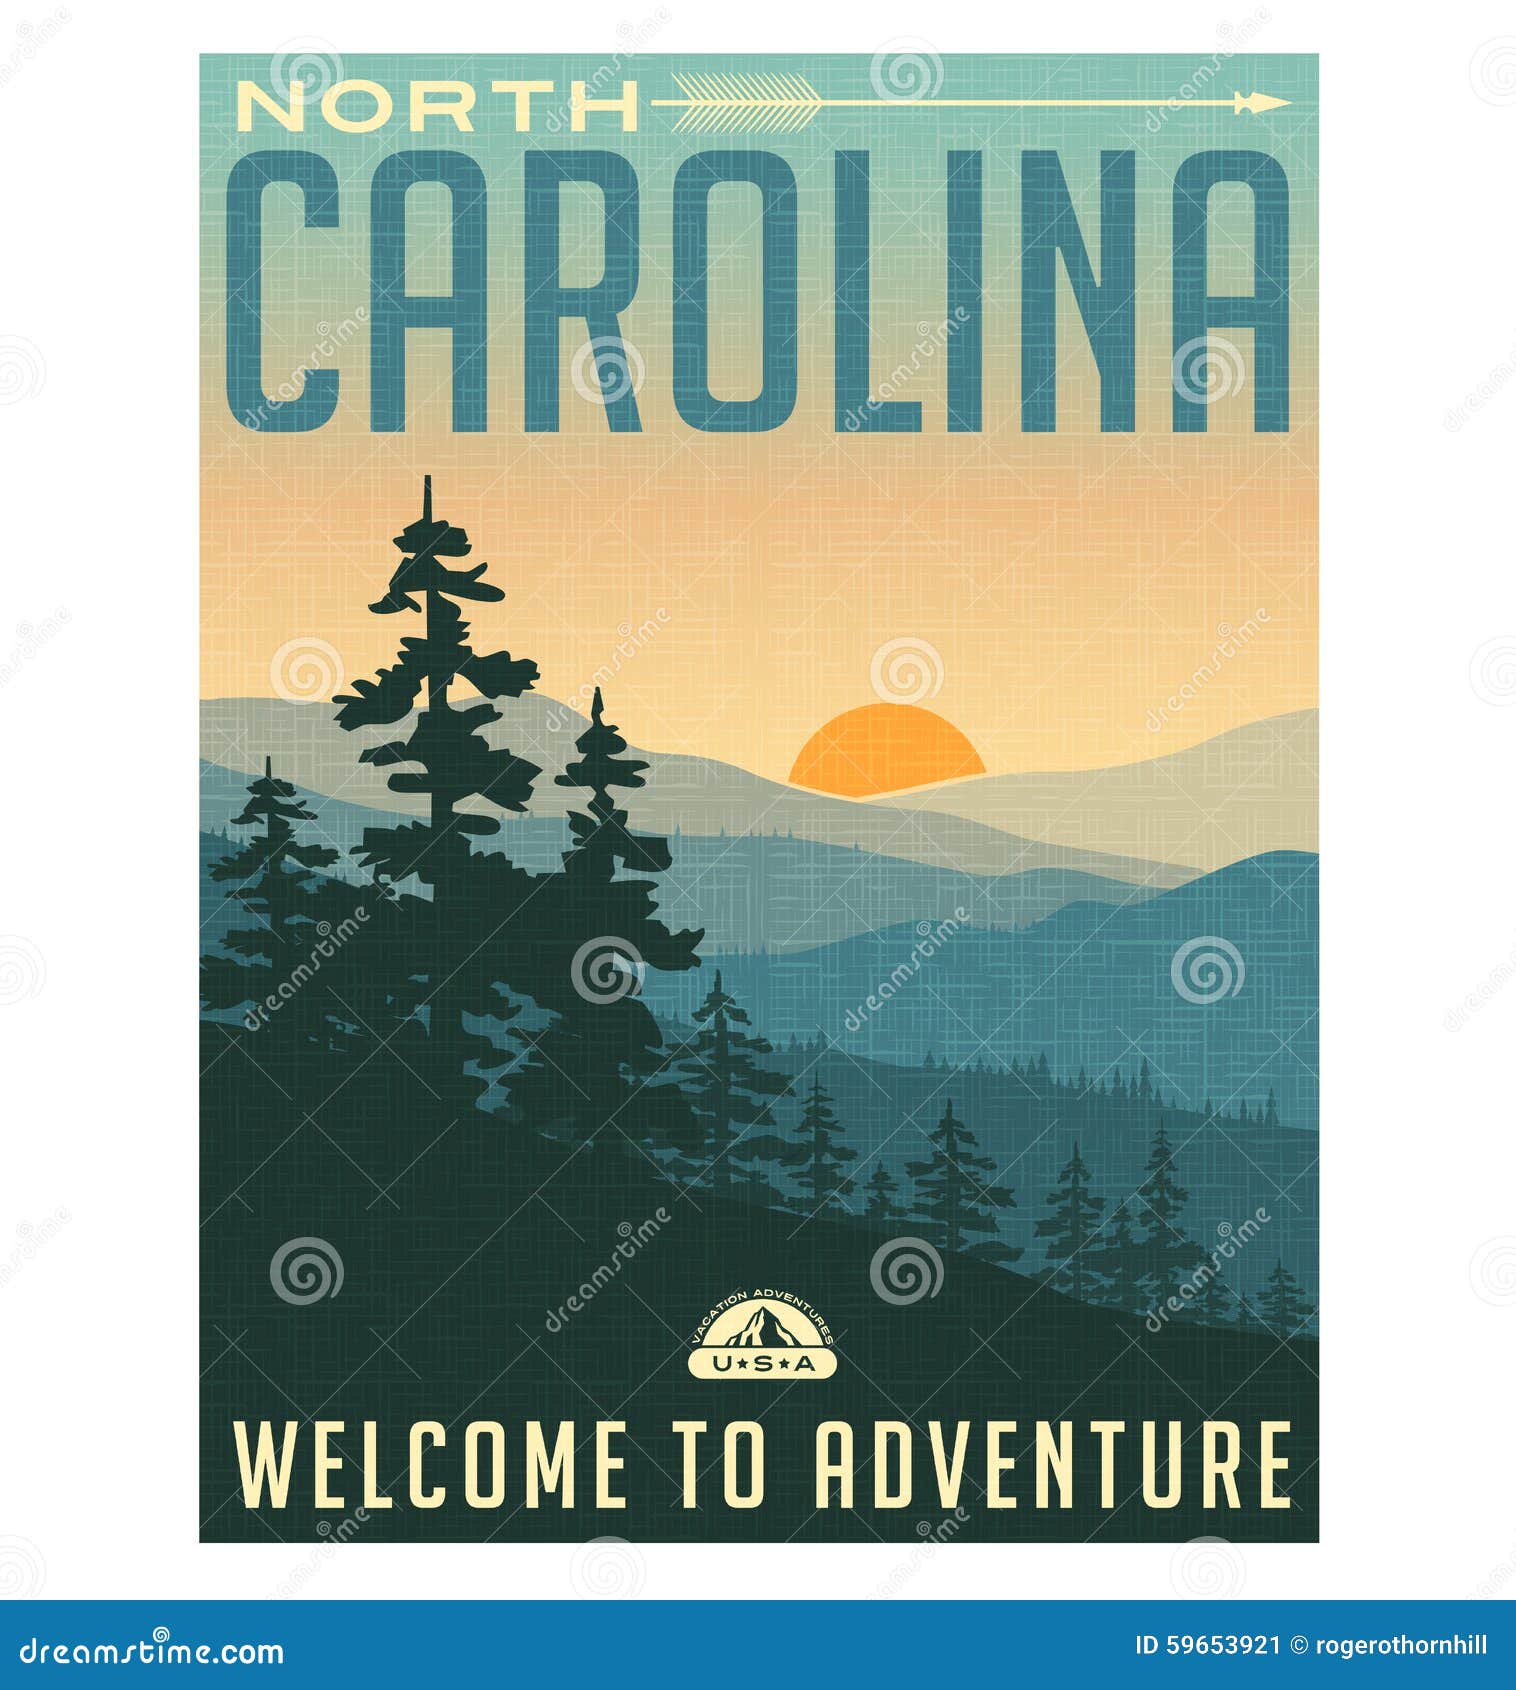 retro style travel poster or sticker. north carolina